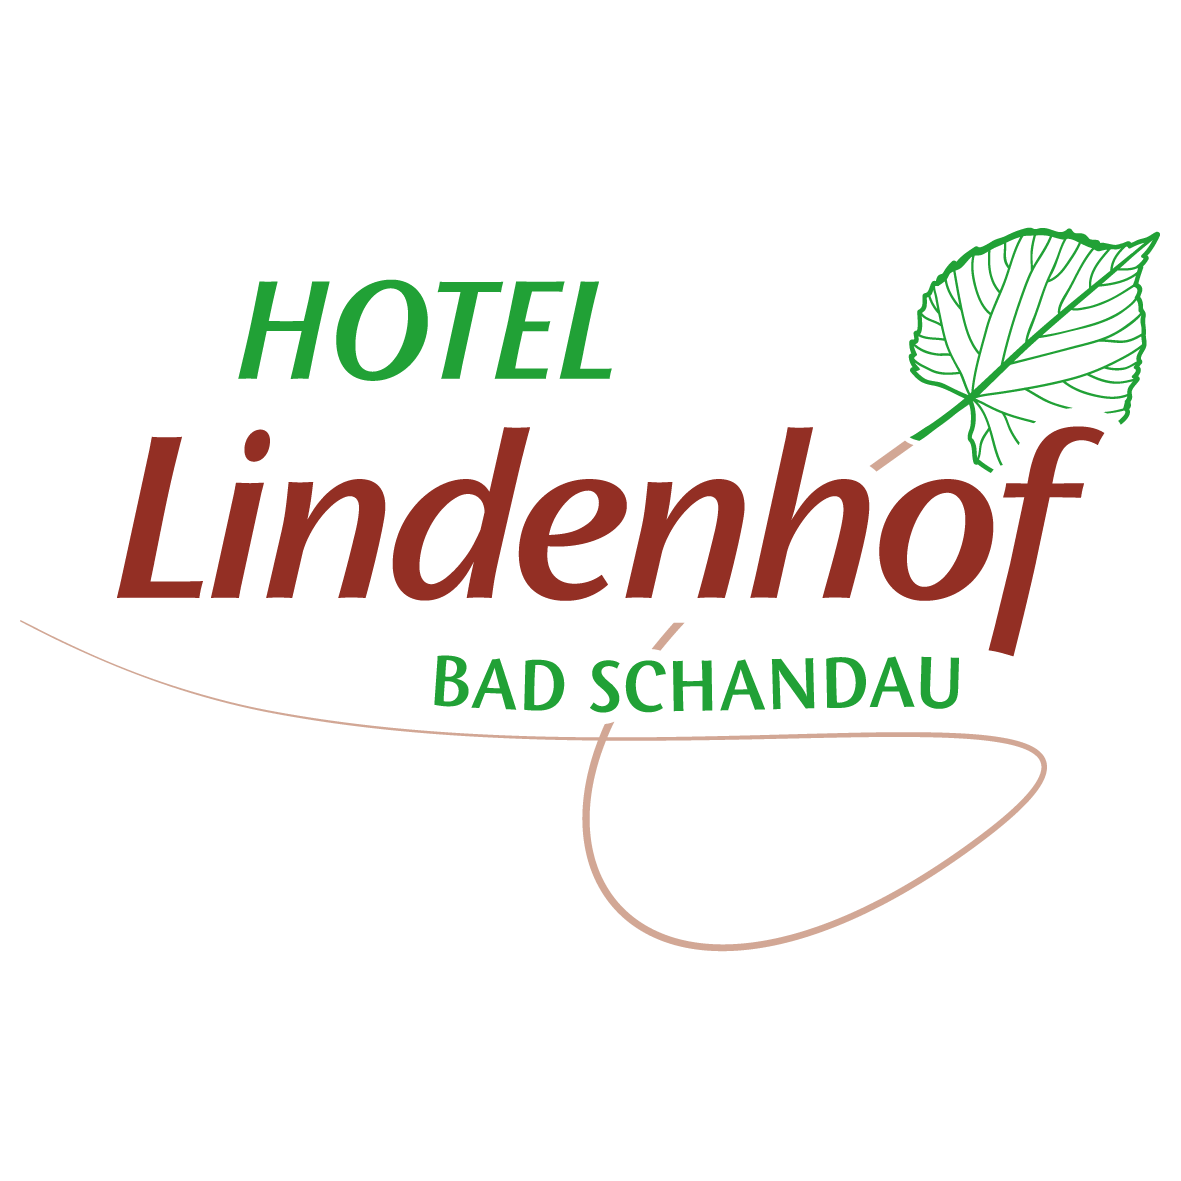 Hotel Lindenhof Bad Schandau Logo